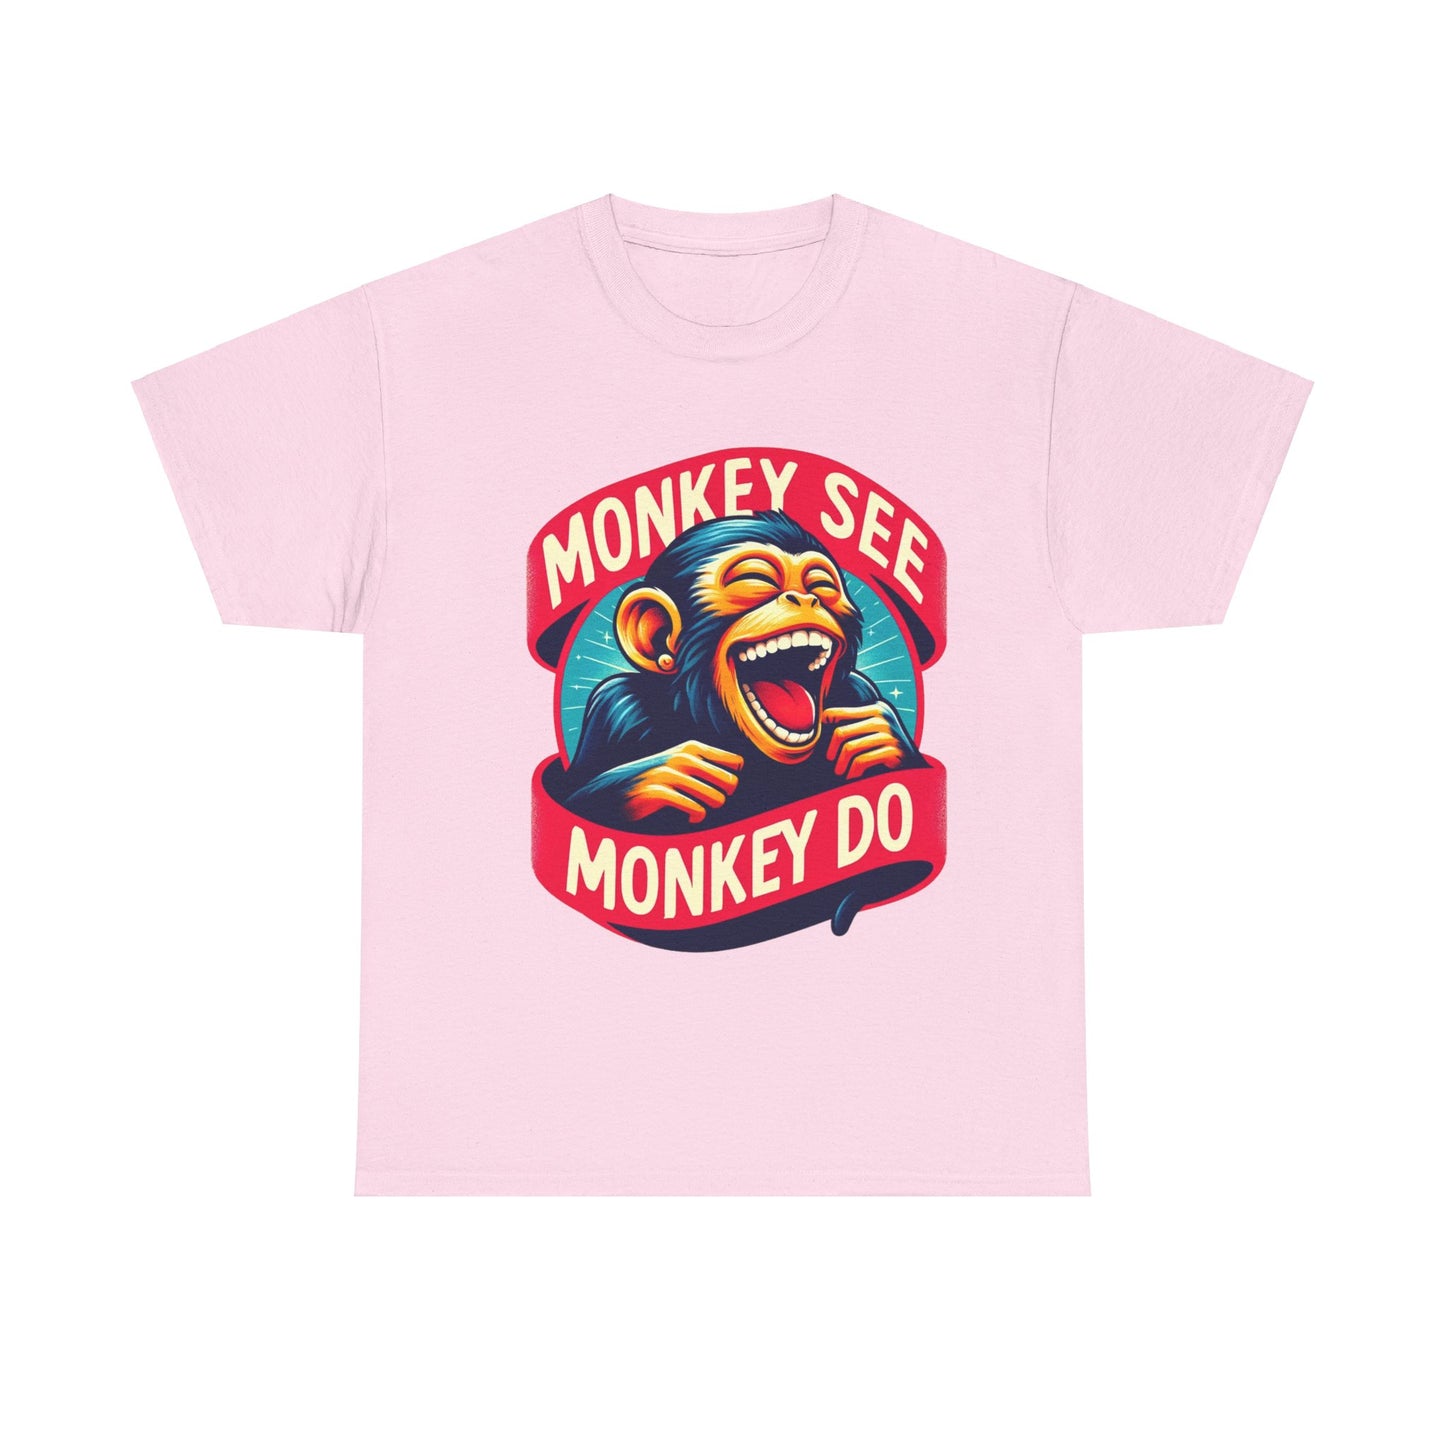 Y.M.L.Y. "Monkey See Monkey Do" T-Shirt Funny T-Shirts Monkey T-Shirts Urban Wear Unisex Heavy Cotton Tee